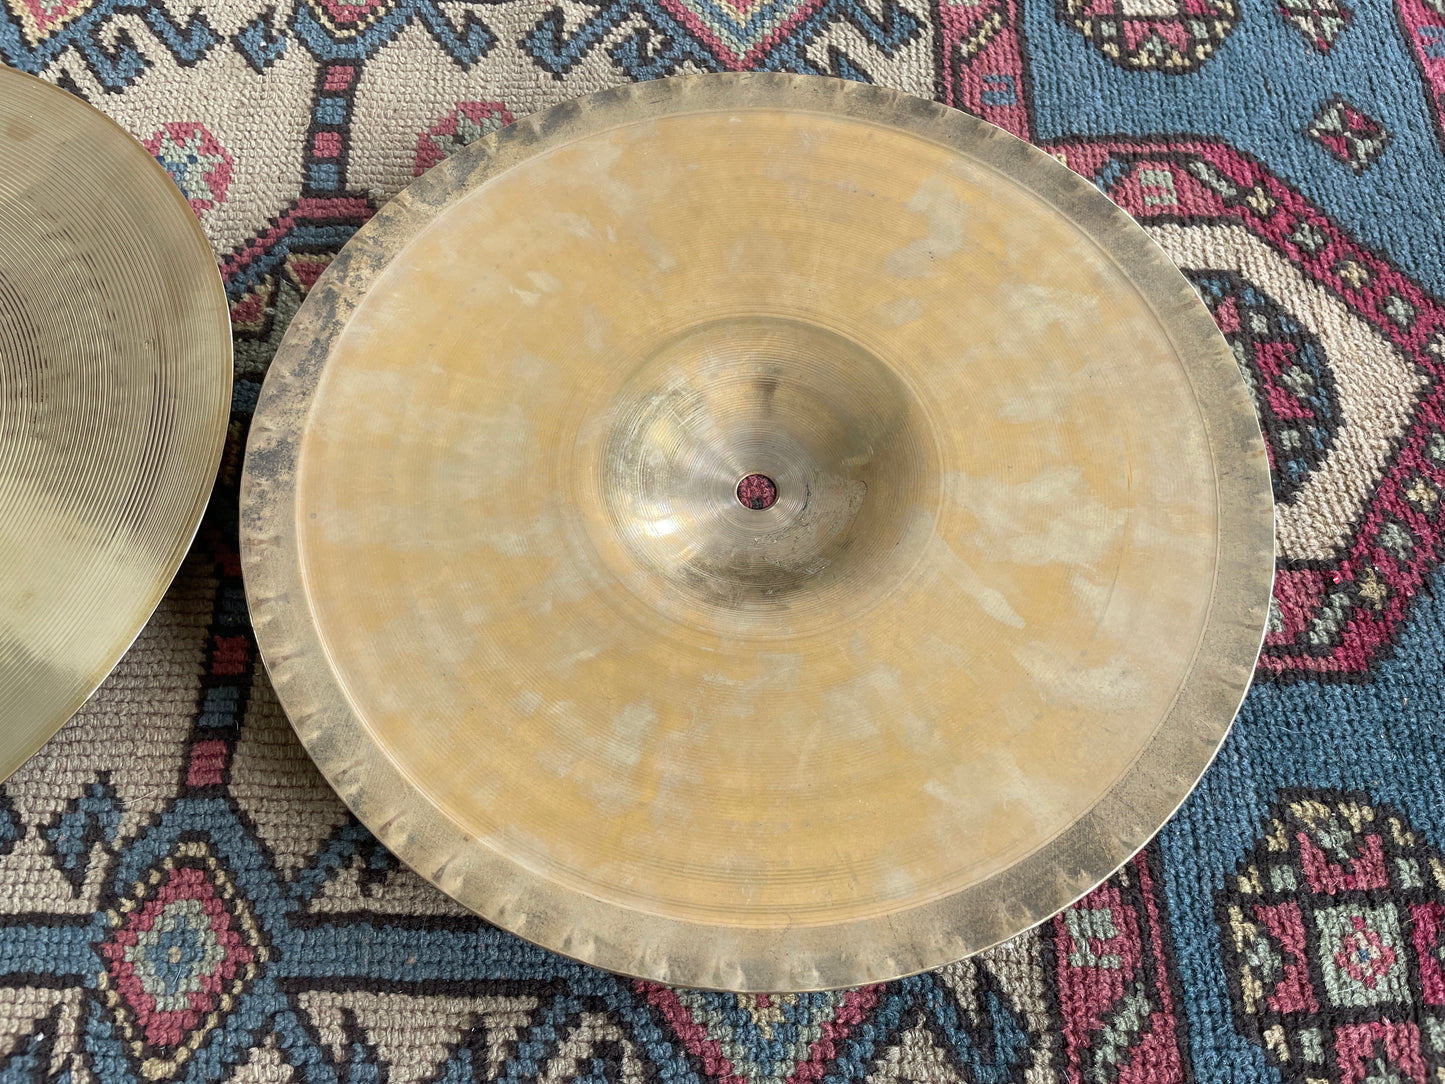 12" Zildjian A Custom Mastersound Hi-Hat Cymbal Pair 784g/932g